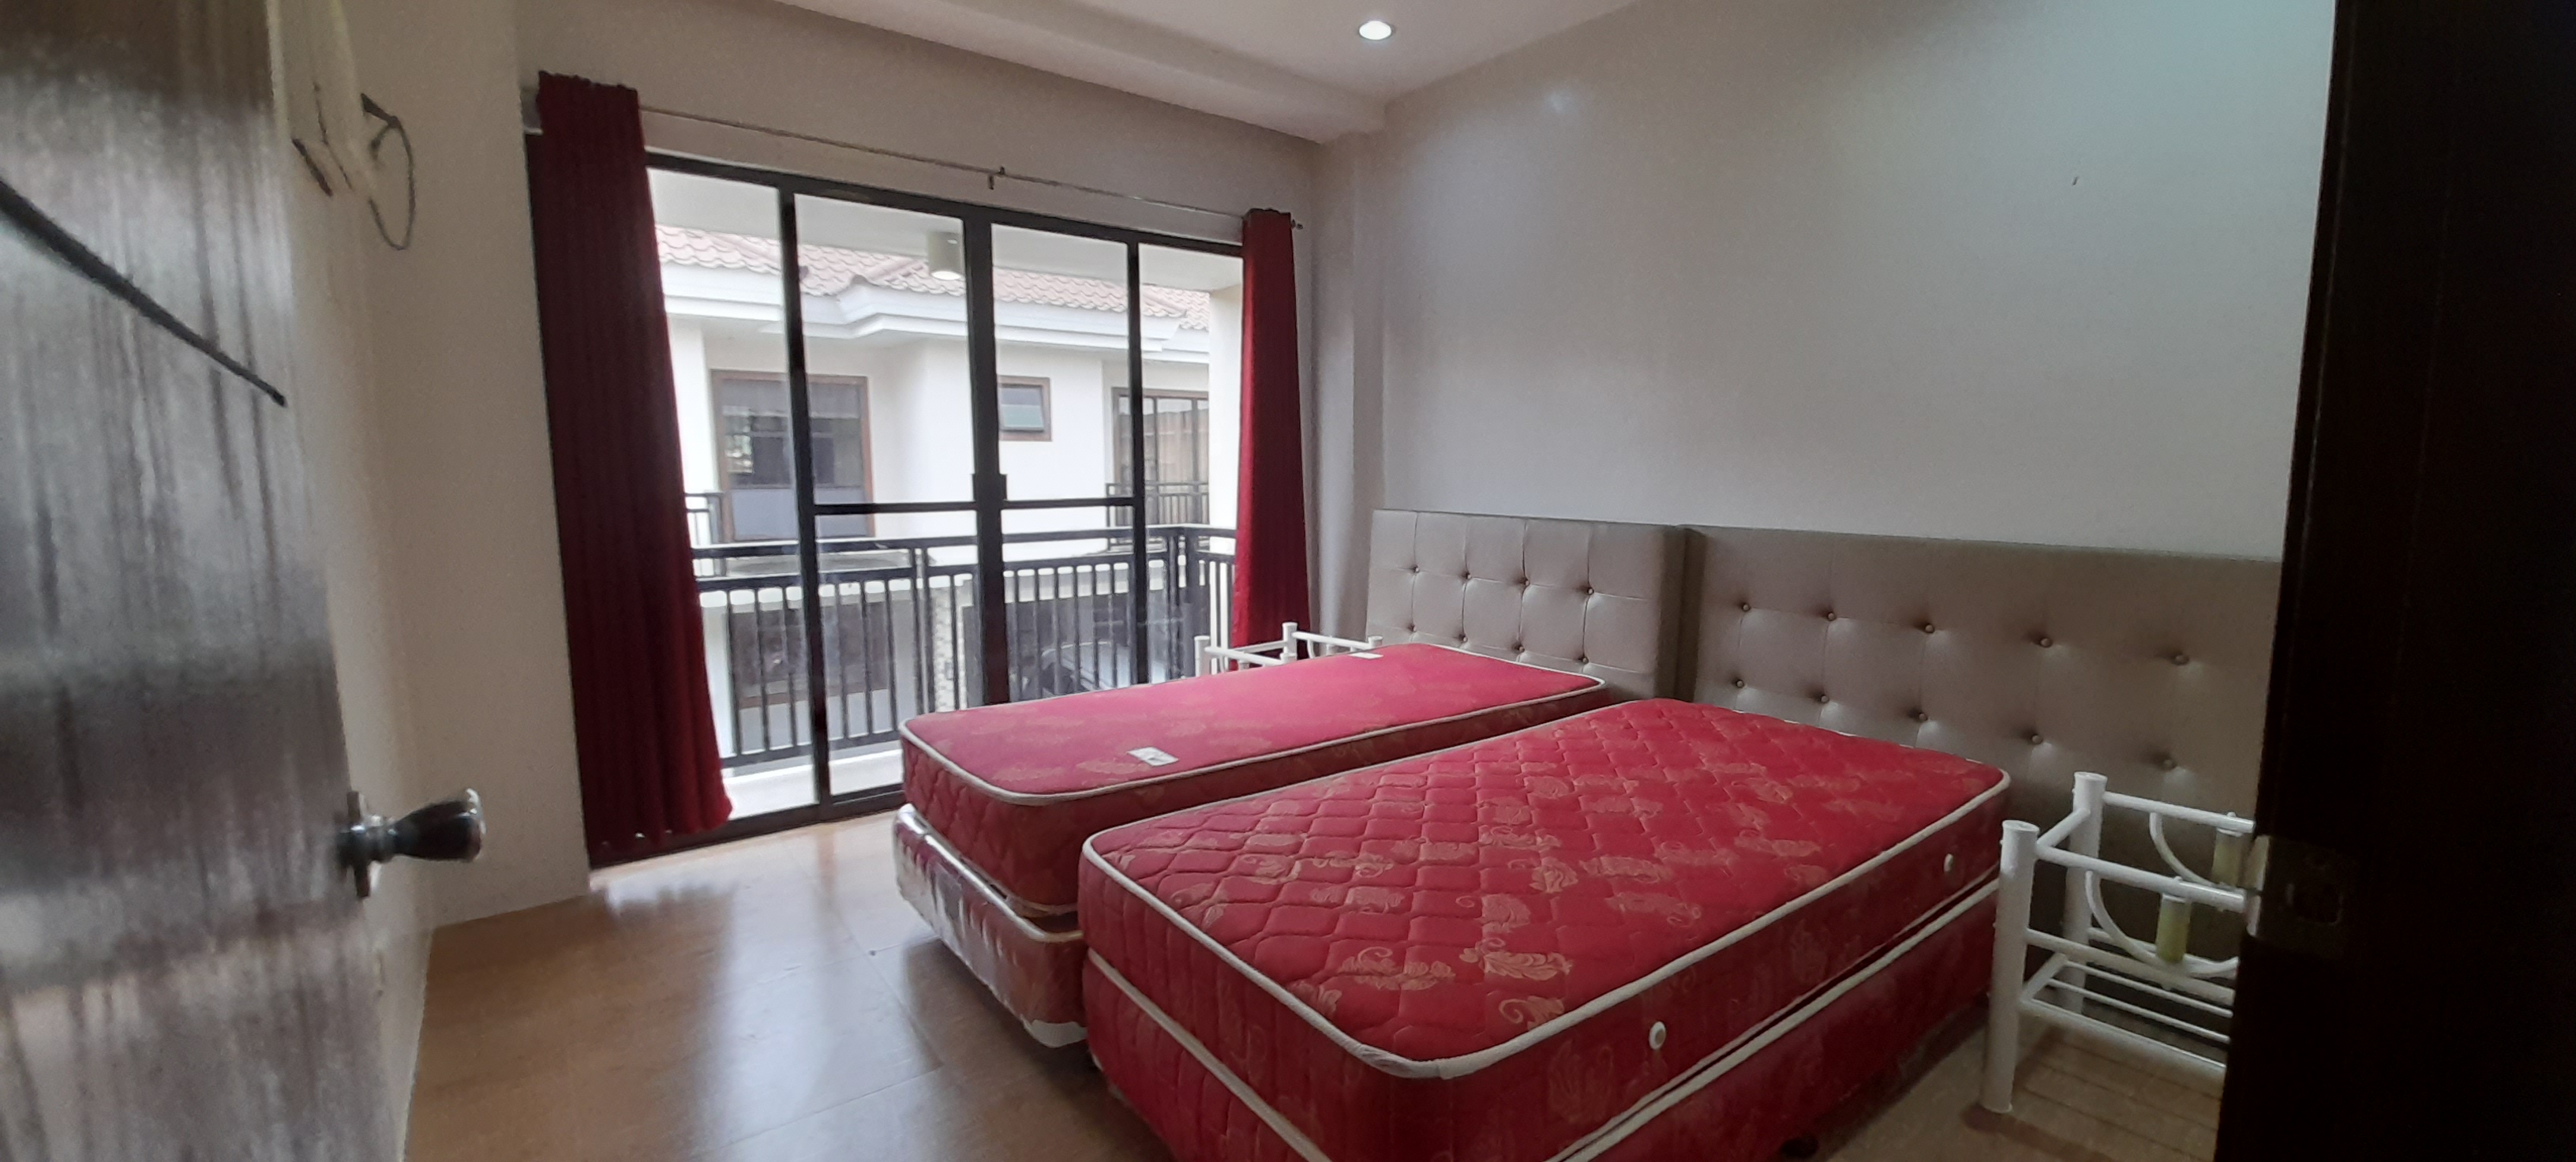 3-bedroom-semi-furnished-apartment-in-guadalupe-cebu-city-cebu